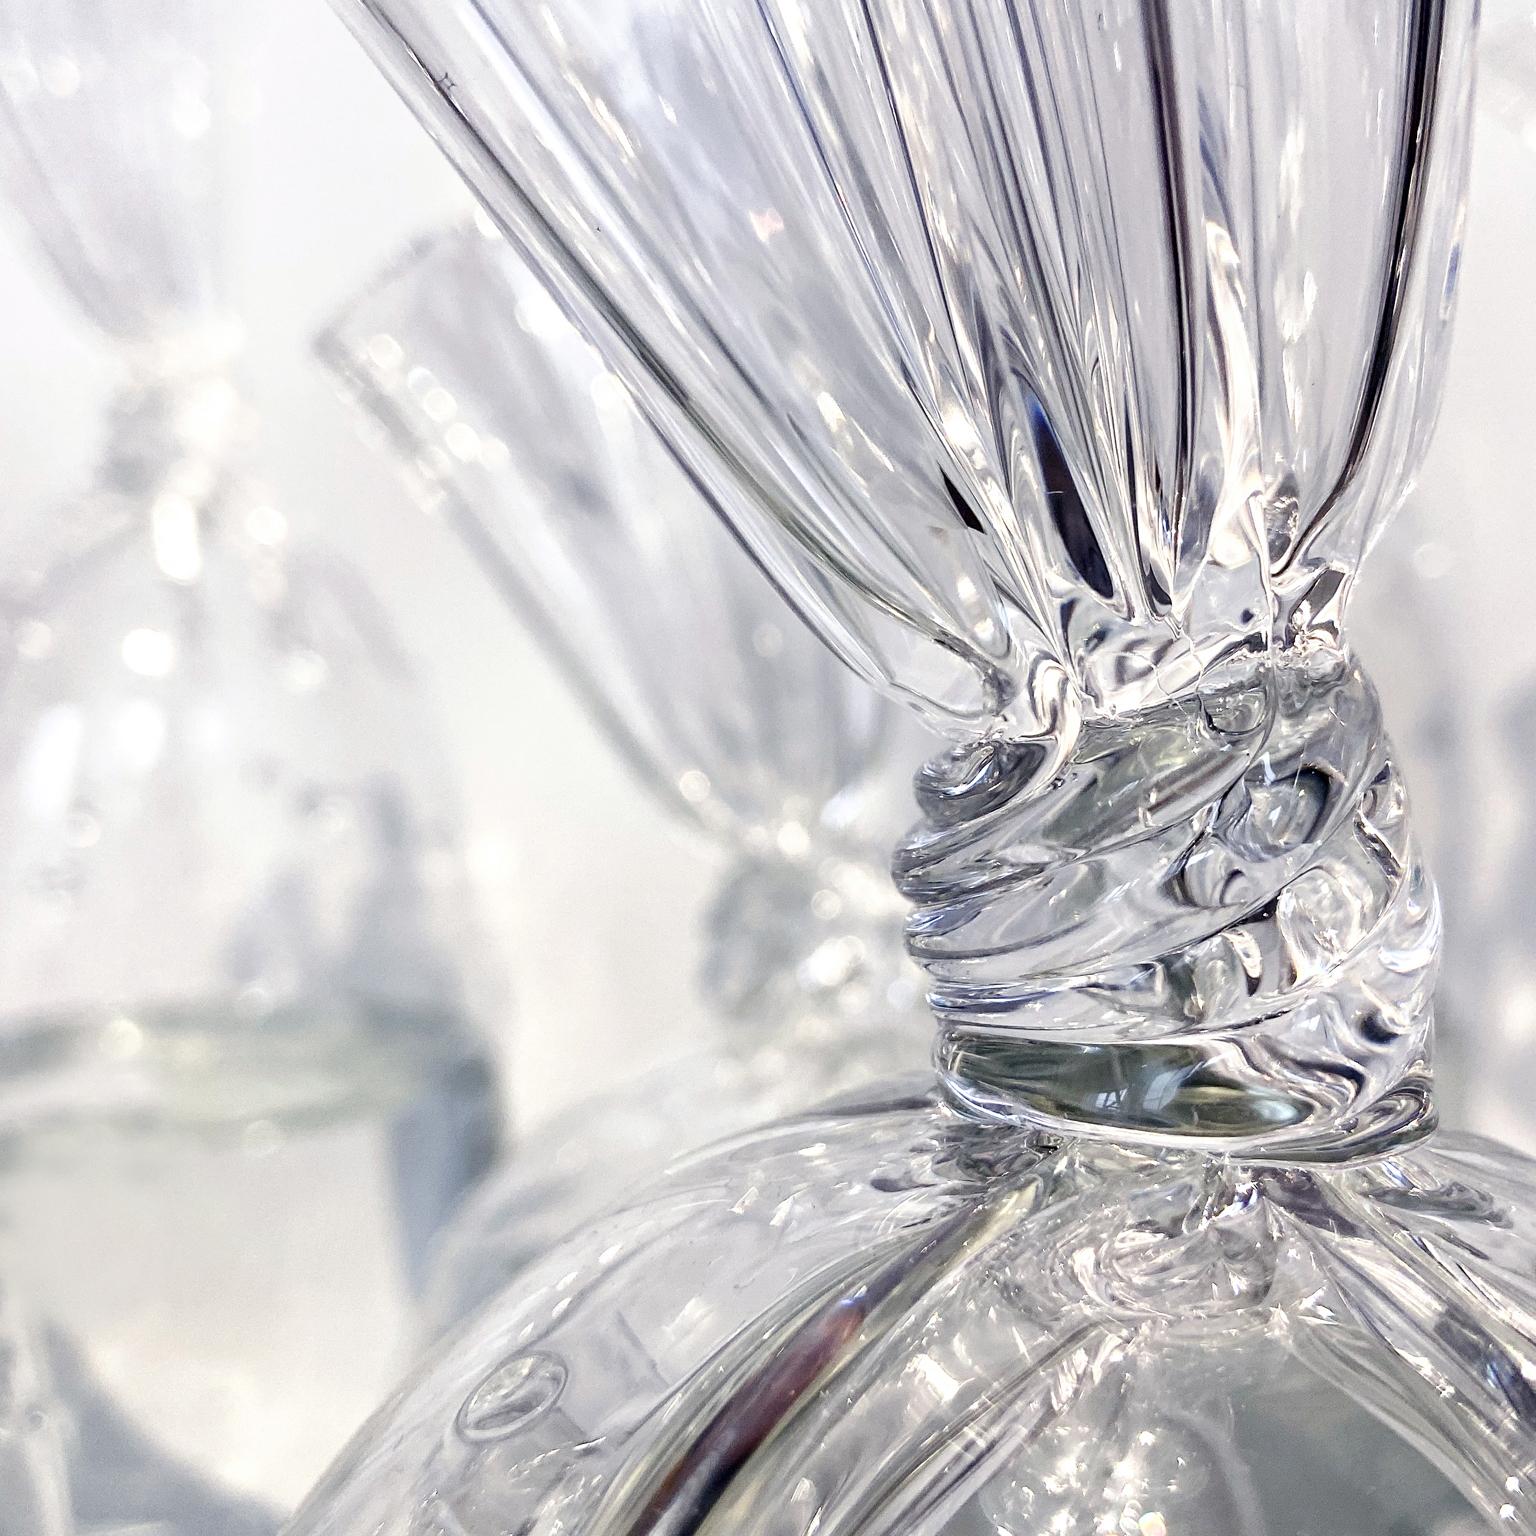  Contemporary Blown Glass: Water Bag IX - Sculpture by Dylan Martinez